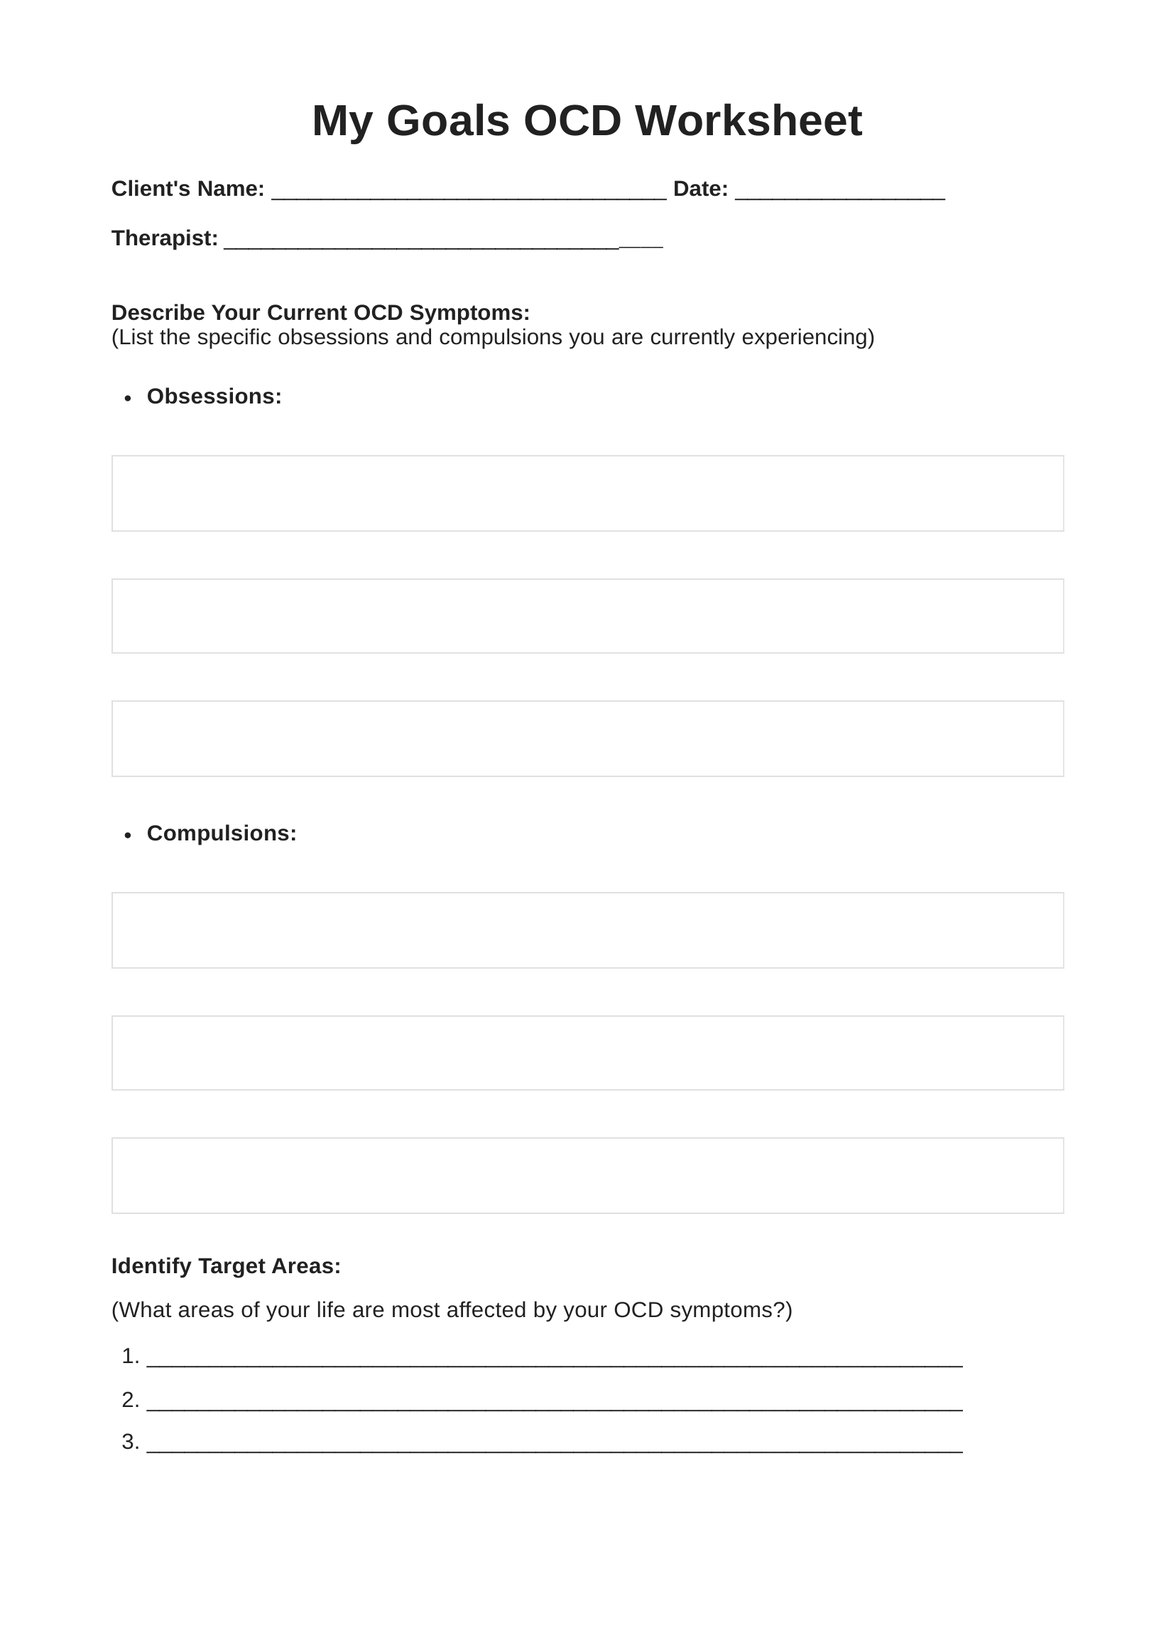 My Goals OCD Worksheet PDF Example